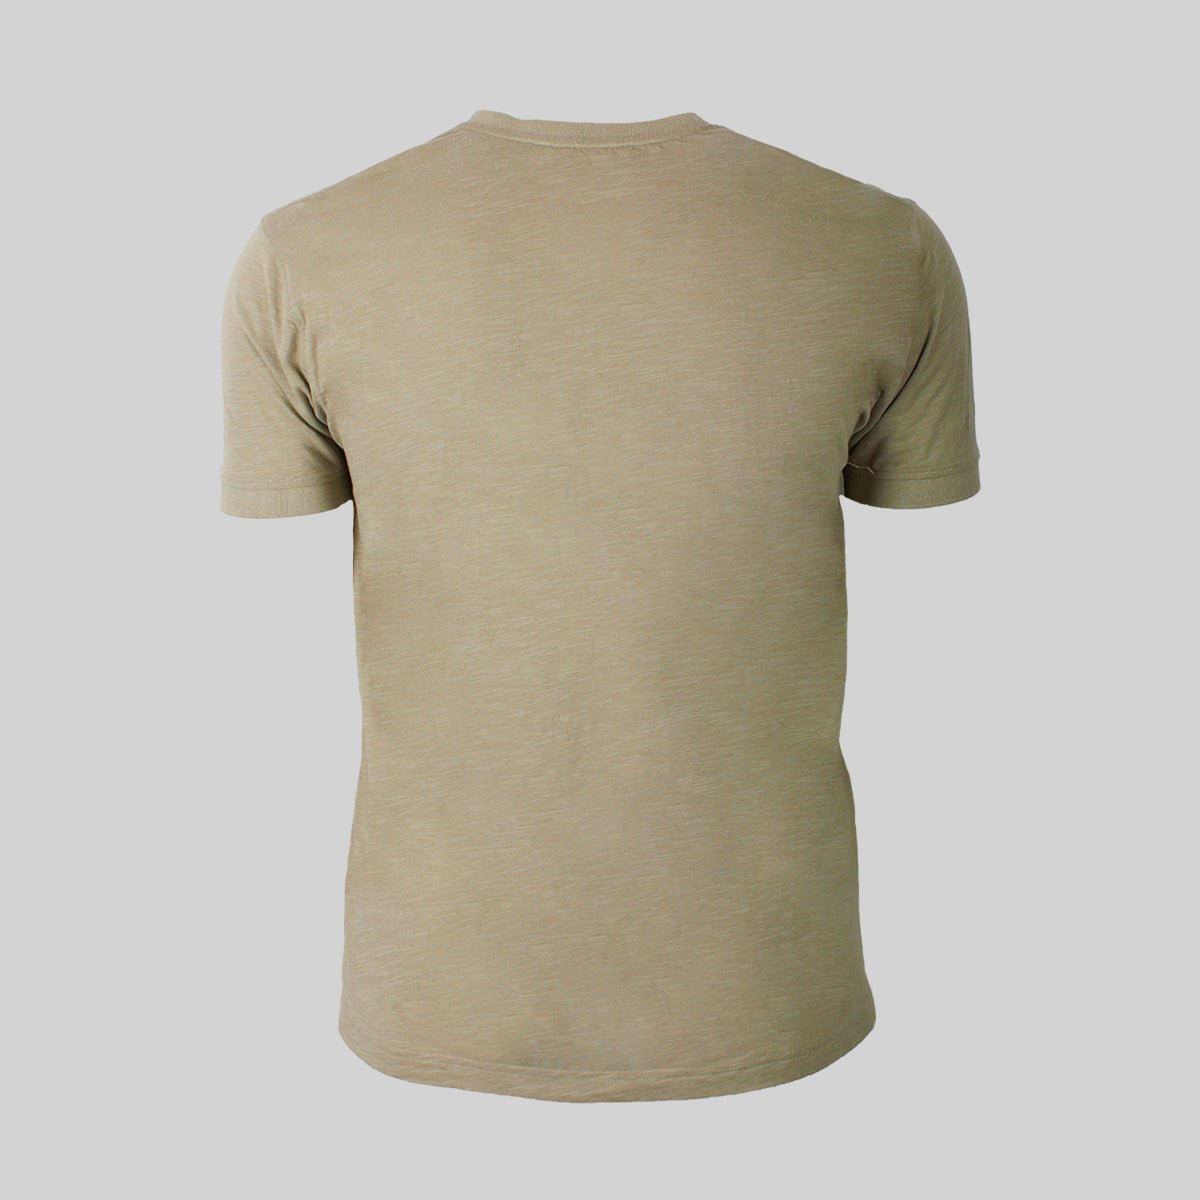 Tee-shirt manches courtes kaki A223TC05-VE2-S#48898 - Blacks Legend